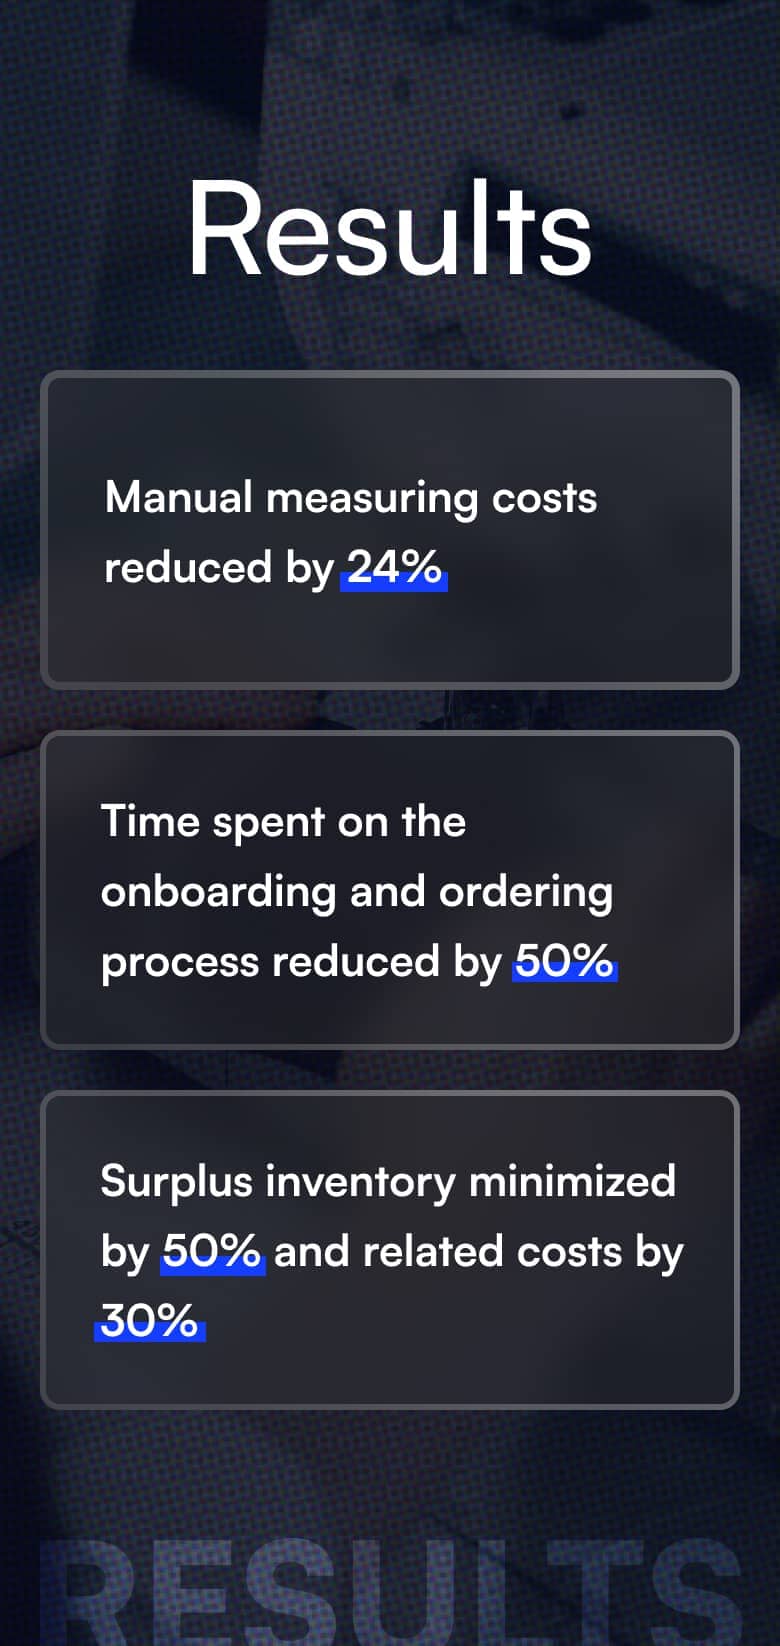 Manual measuring costs reduced by 20%, increasing efficiency.